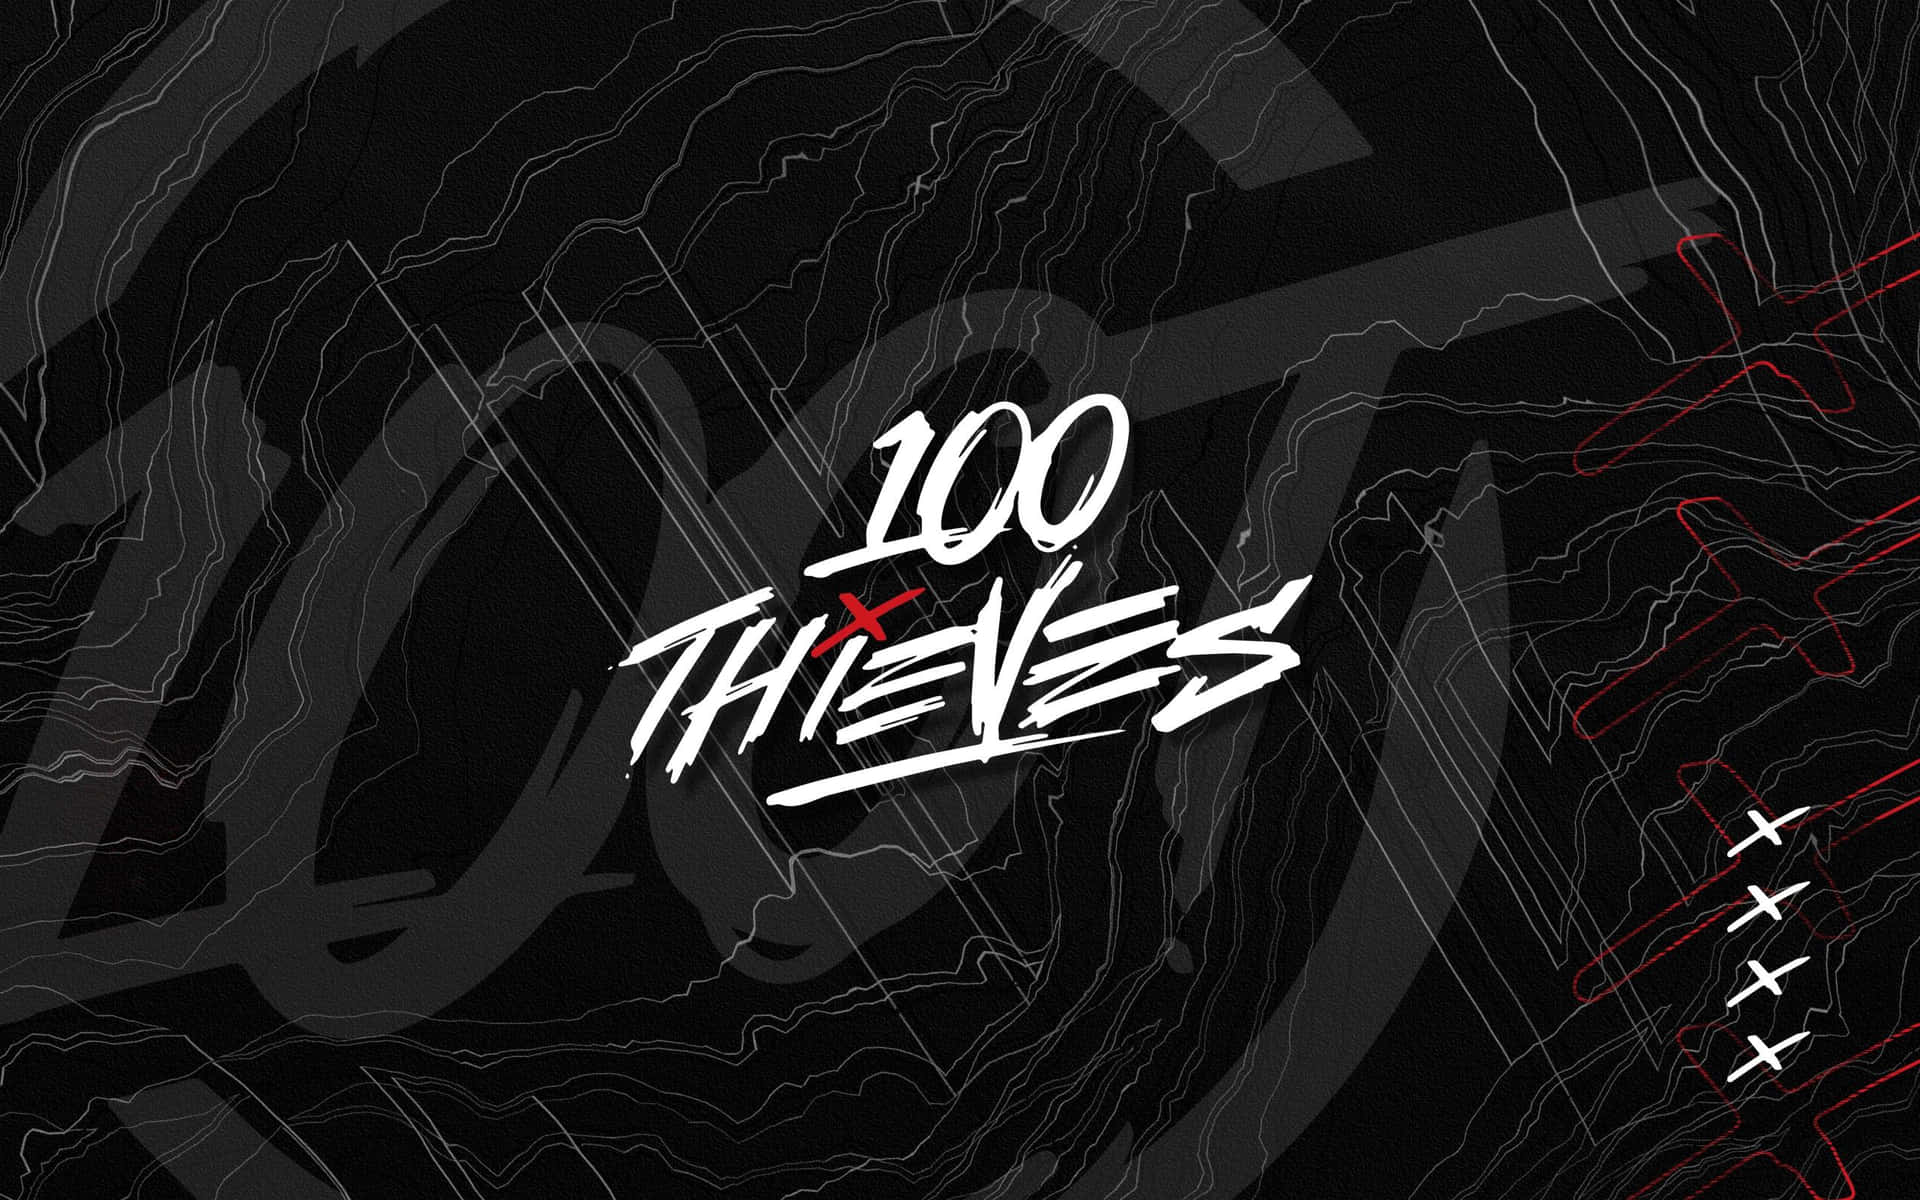 Rappresentando100 Thieves: H1ghr Music Sfondo